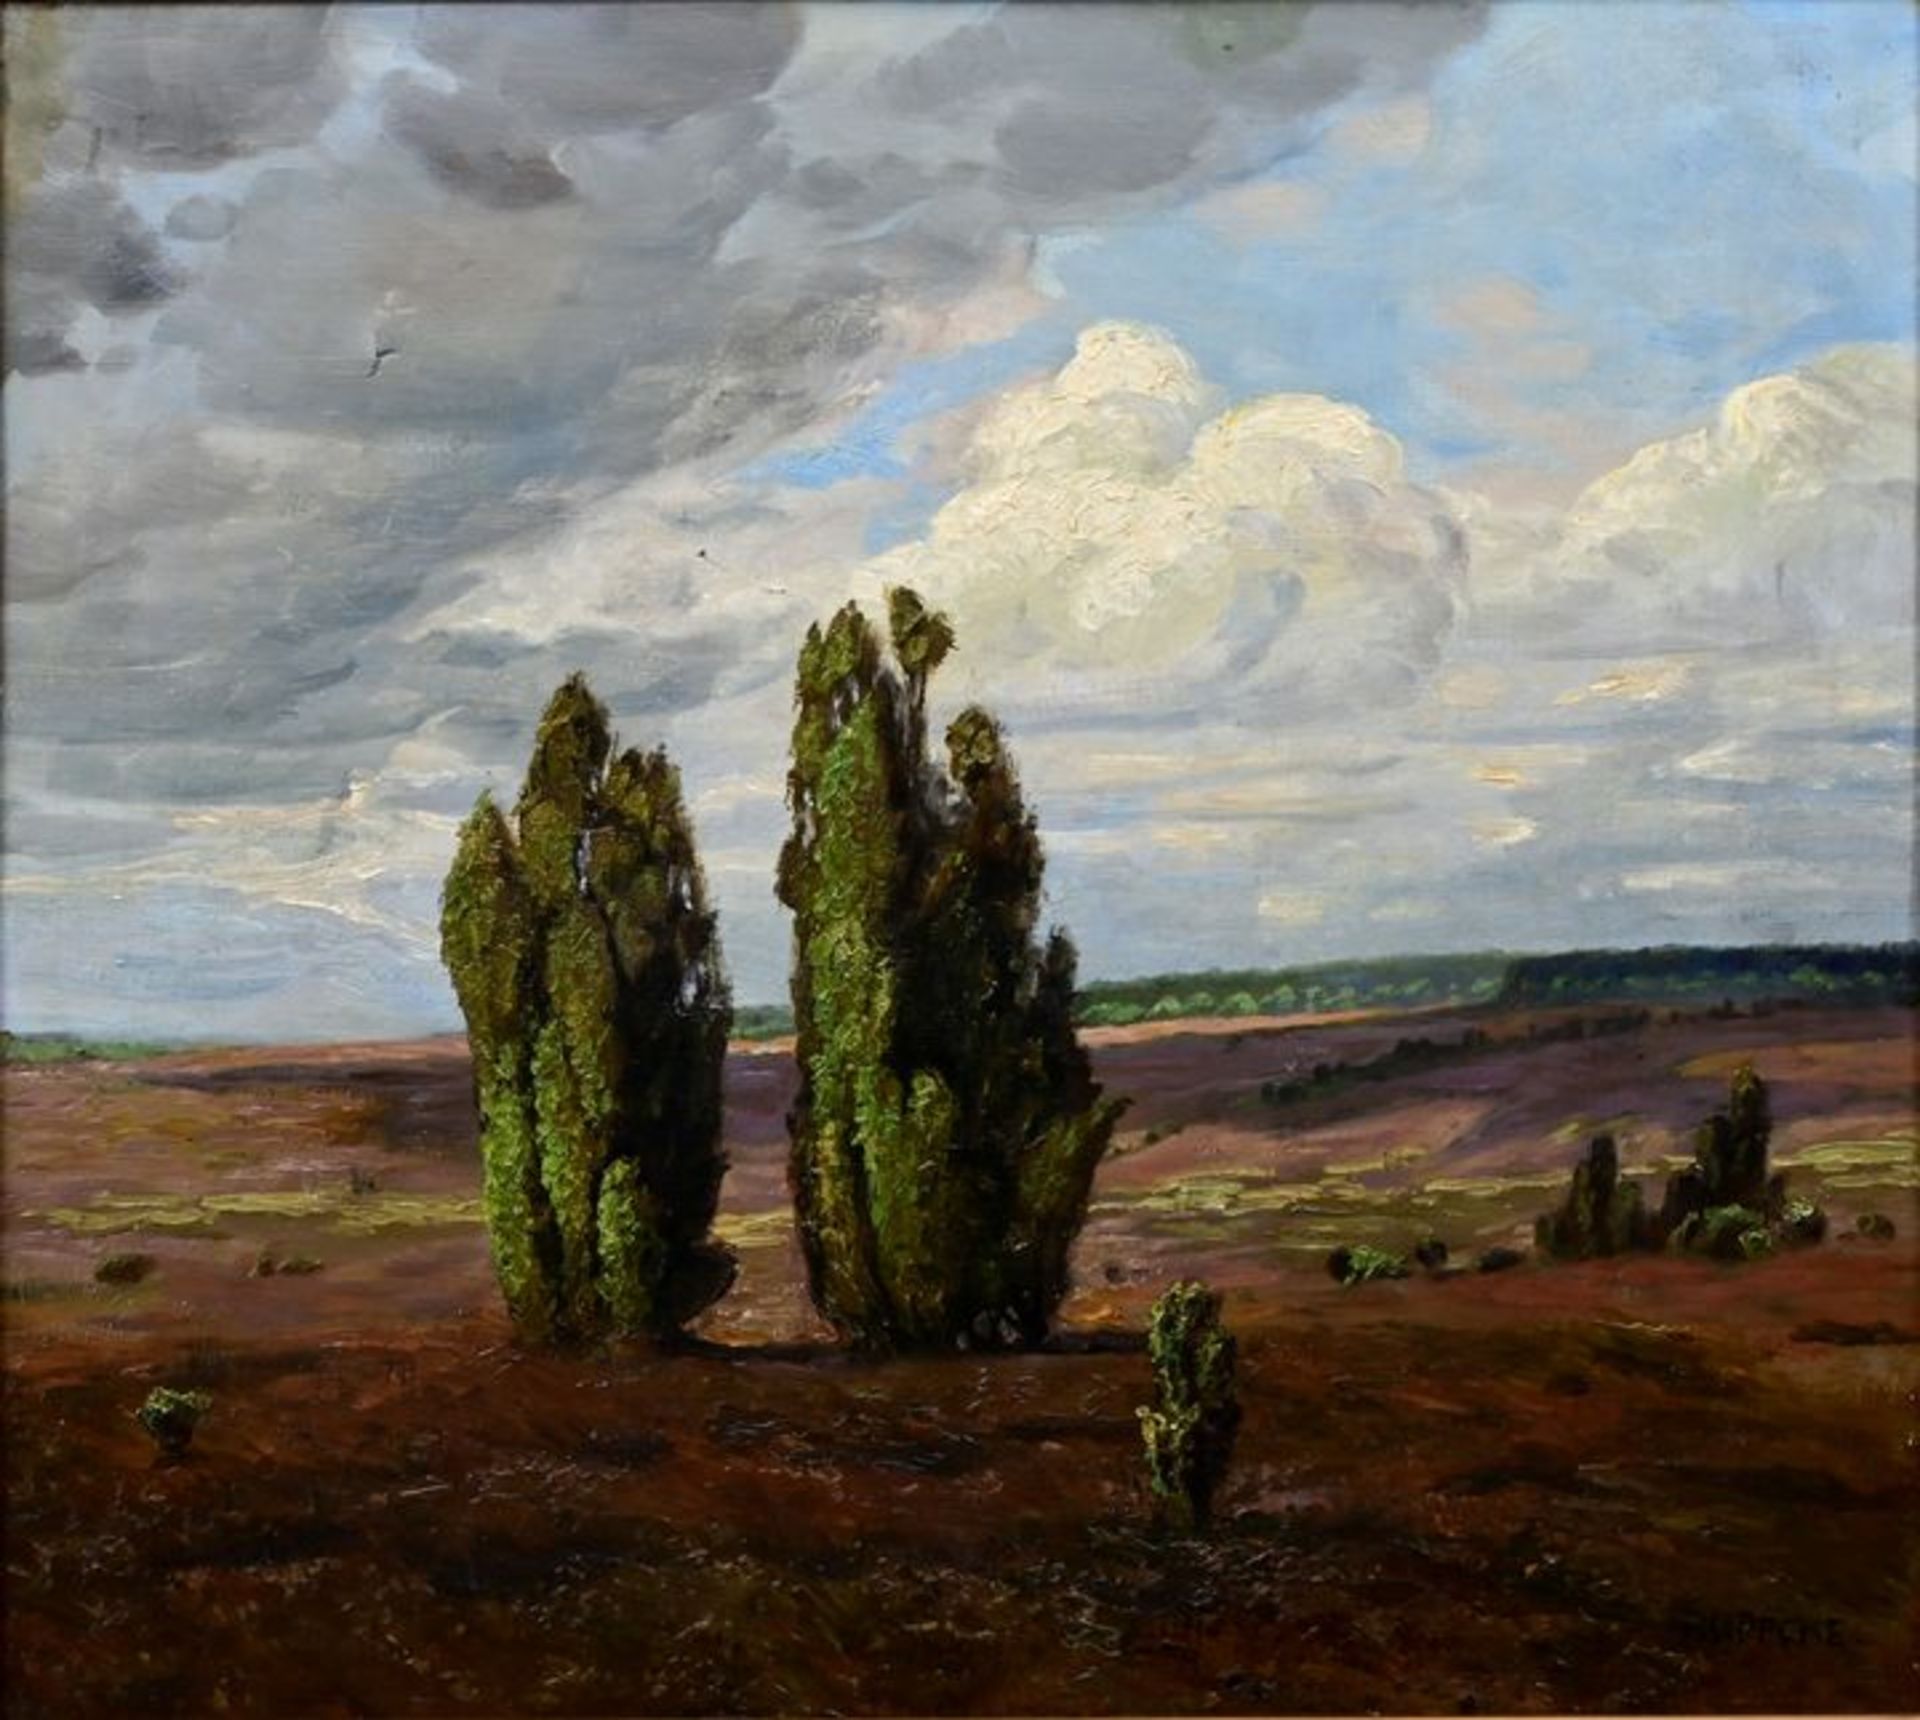 Kippcke, Hans Gemälde Landschaft / landscape painting